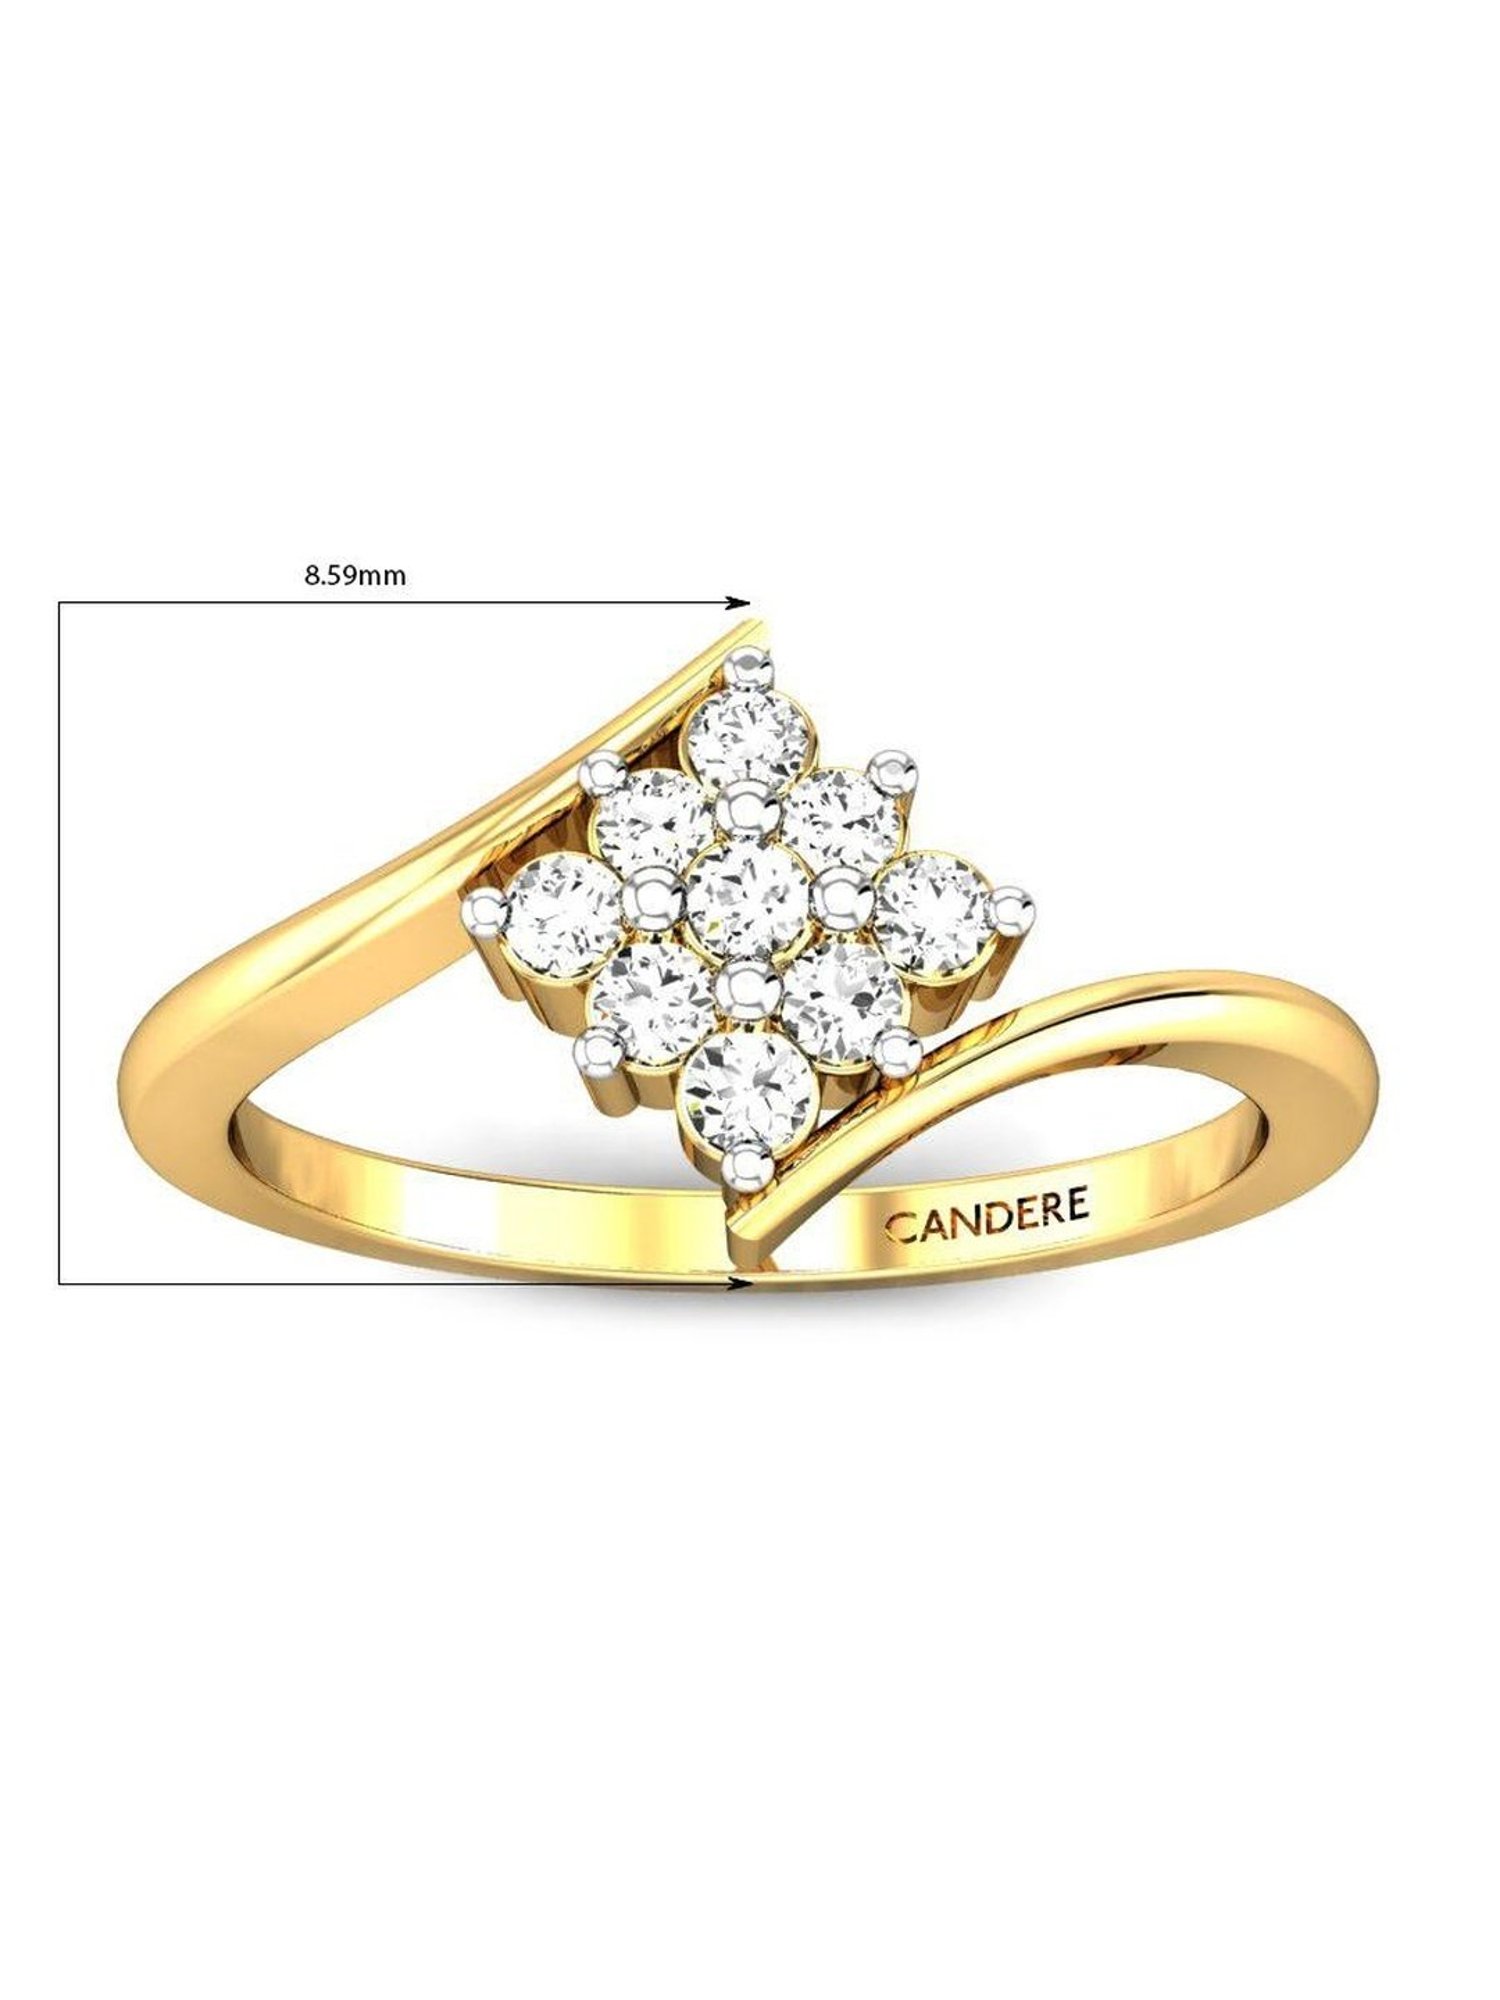 Shop Online Diamond Engagement Rings| Kalyan Jewellers